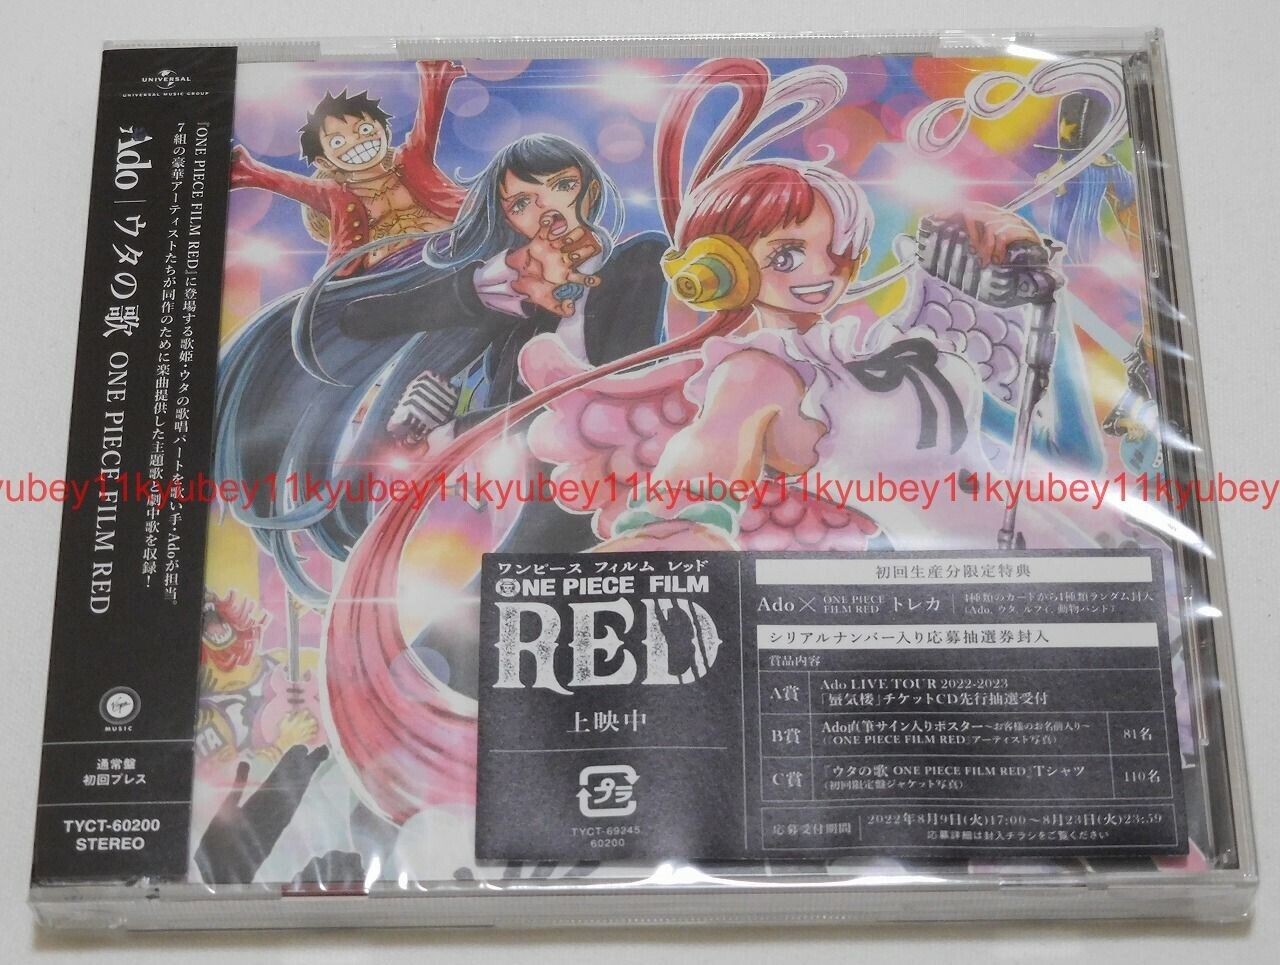 New Ado Uta no Uta ONE PIECE FILM RED Standard Edition CD Card Japan TYCT-60200